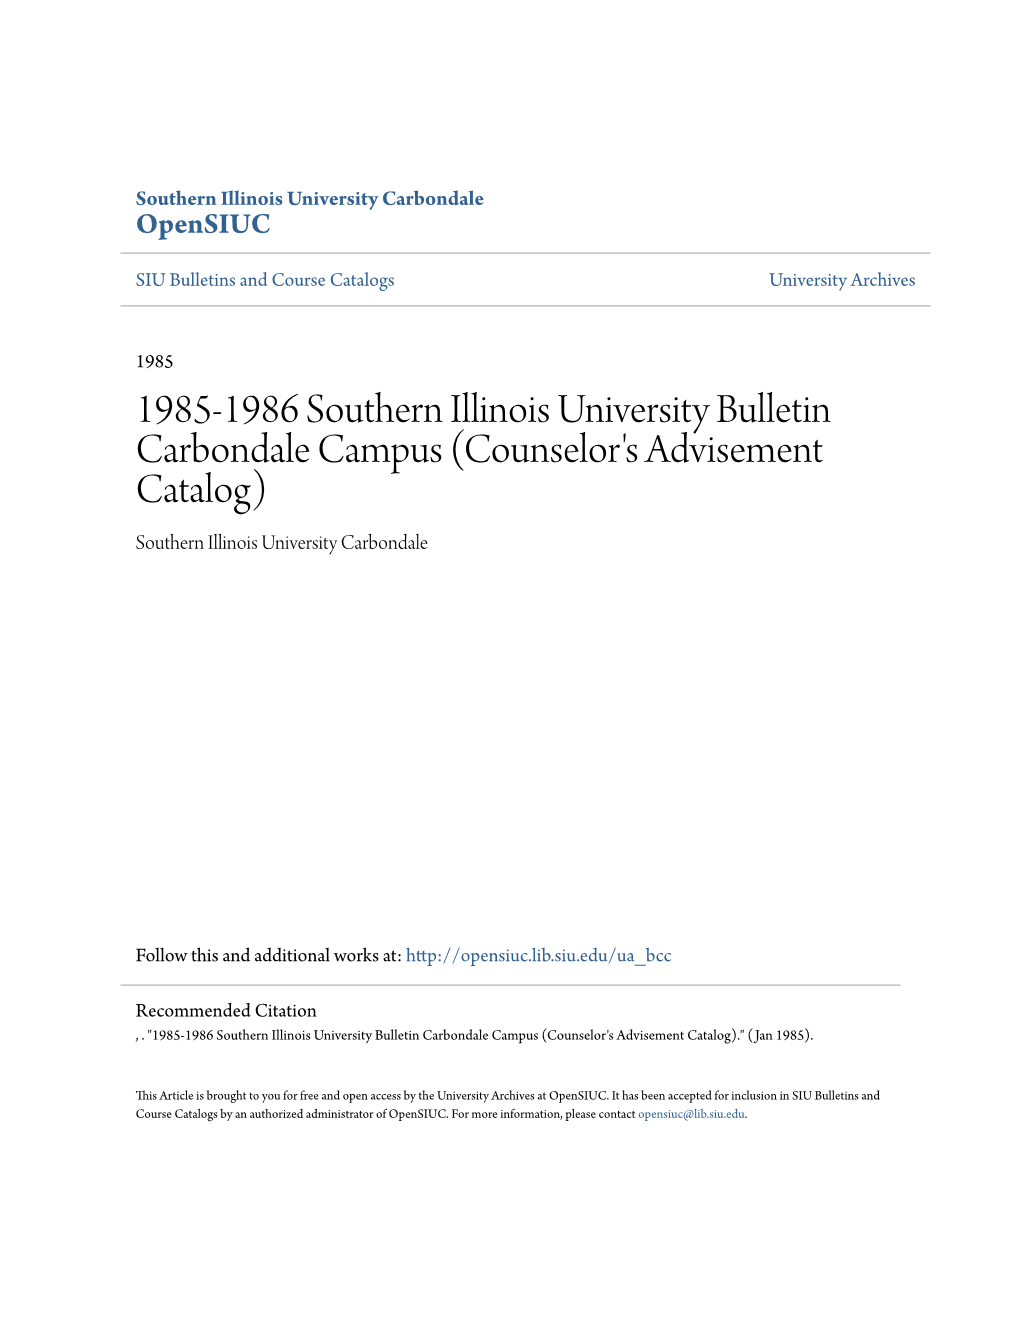 1985-1986 Southern Illinois University Bulletin Carbondale Campus (Counselor's Advisement Catalog) Southern Illinois University Carbondale